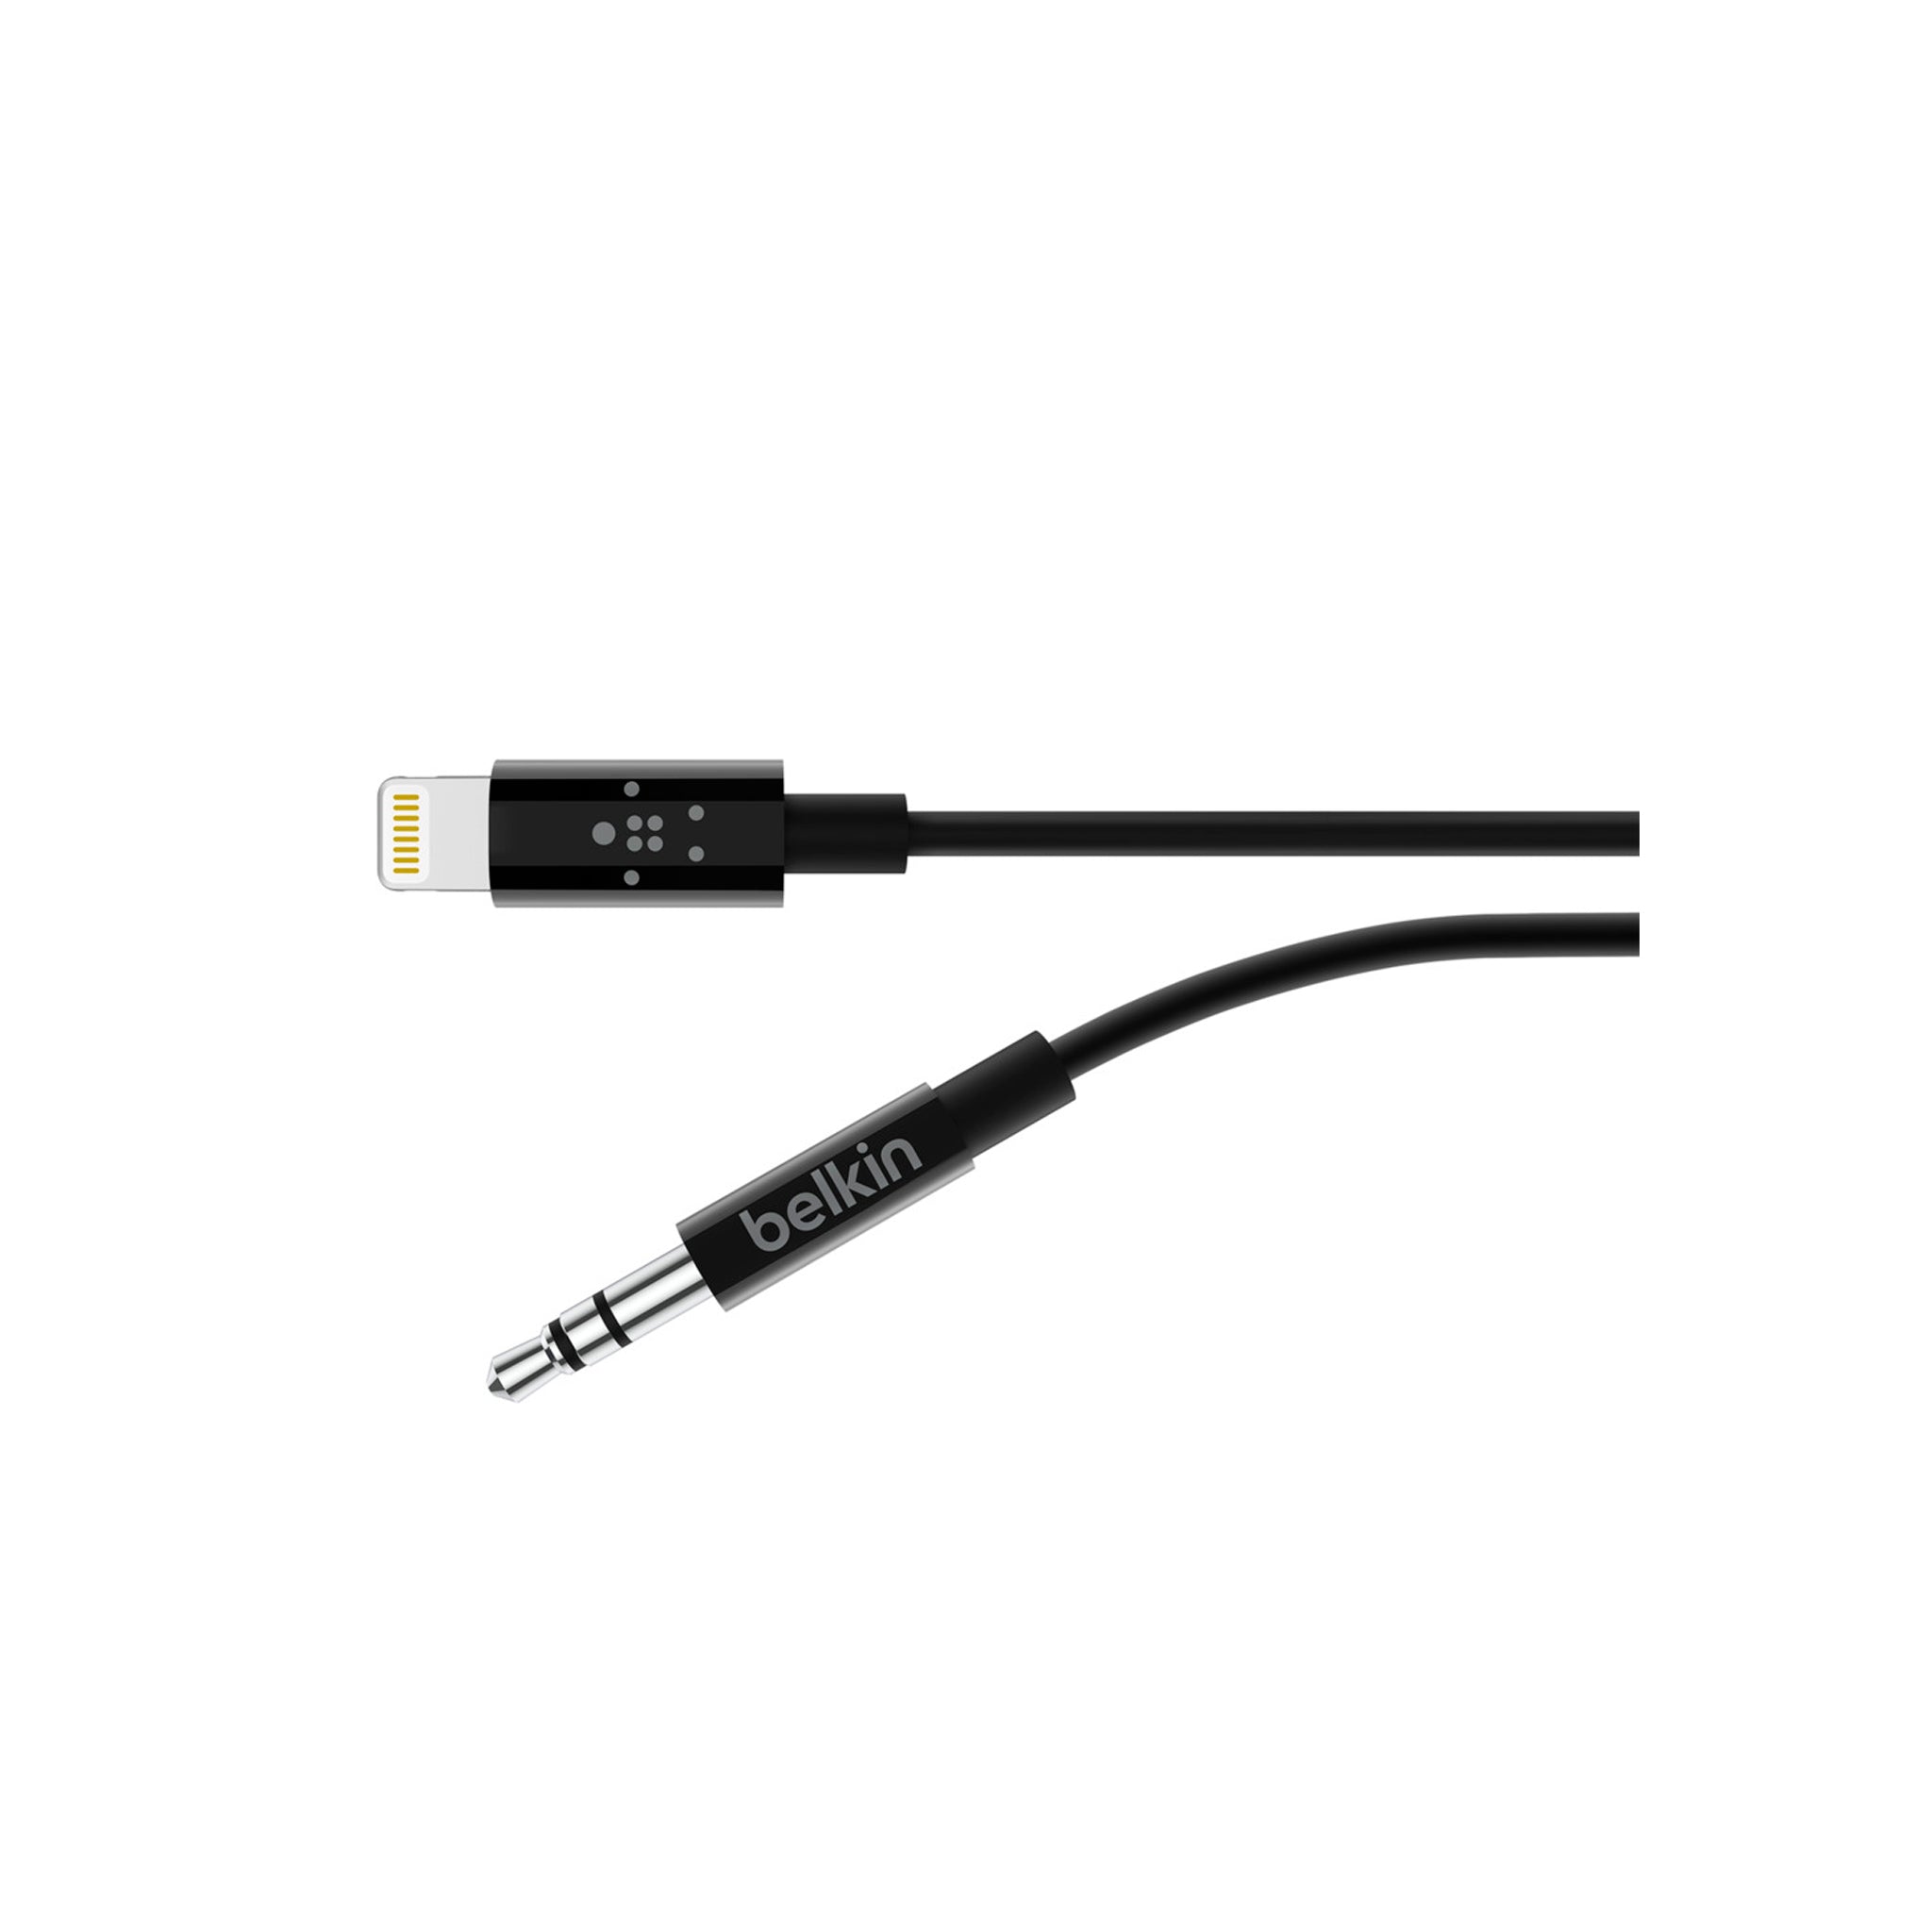 Belkin - Apple Lightning To 3.5mm Aux Cable 3ft - Black